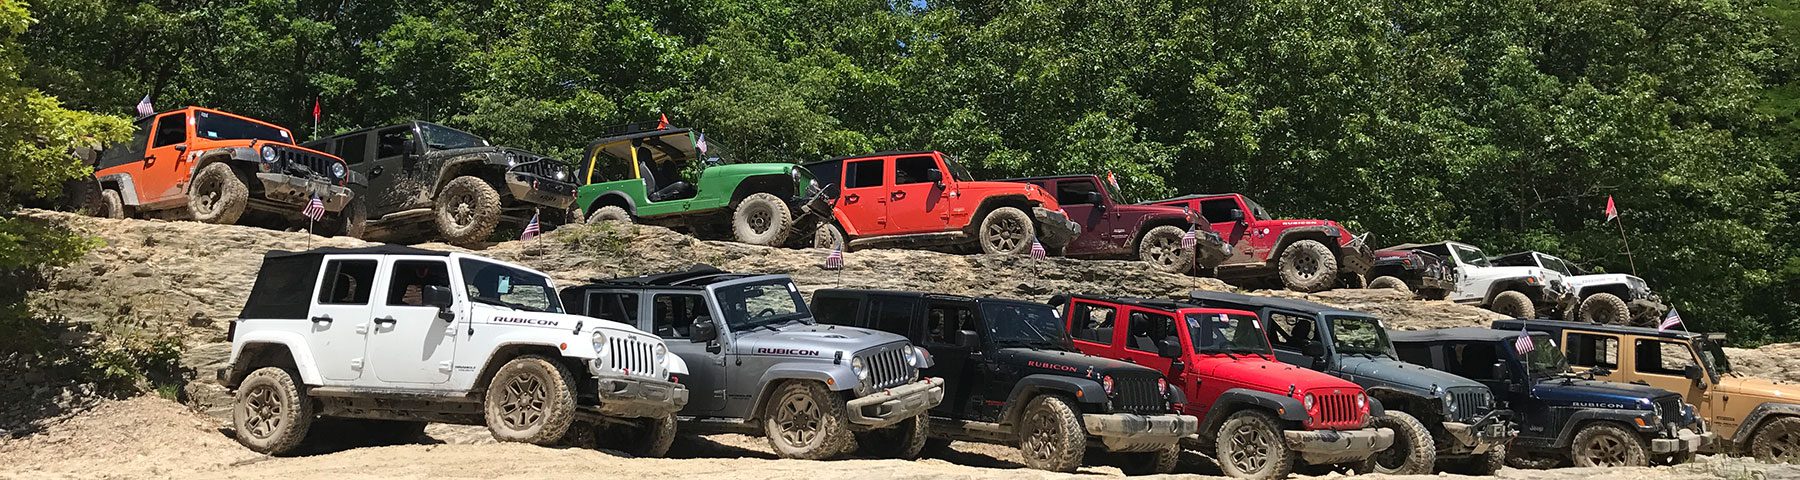 jeeps lined up on rocks